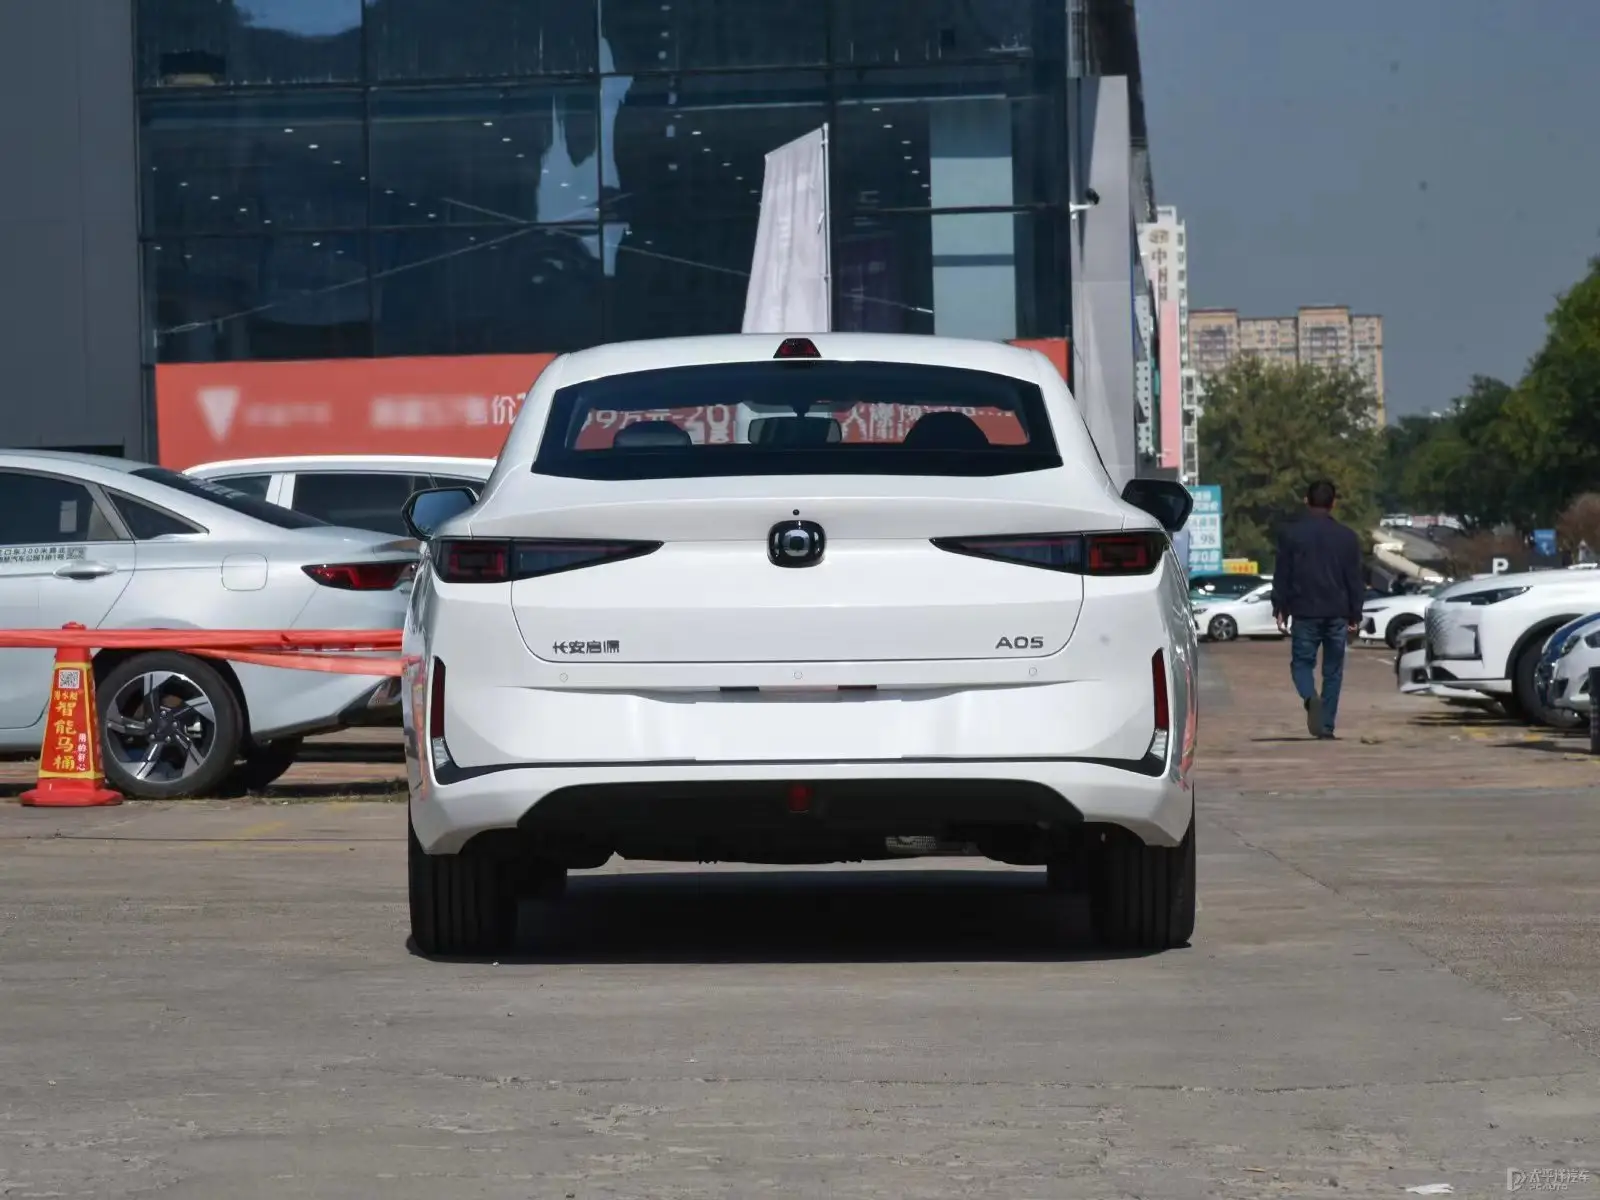 Nuova energia estesa auto grande berlina cinese Changan Qiyuan A05 Automobile per adulti